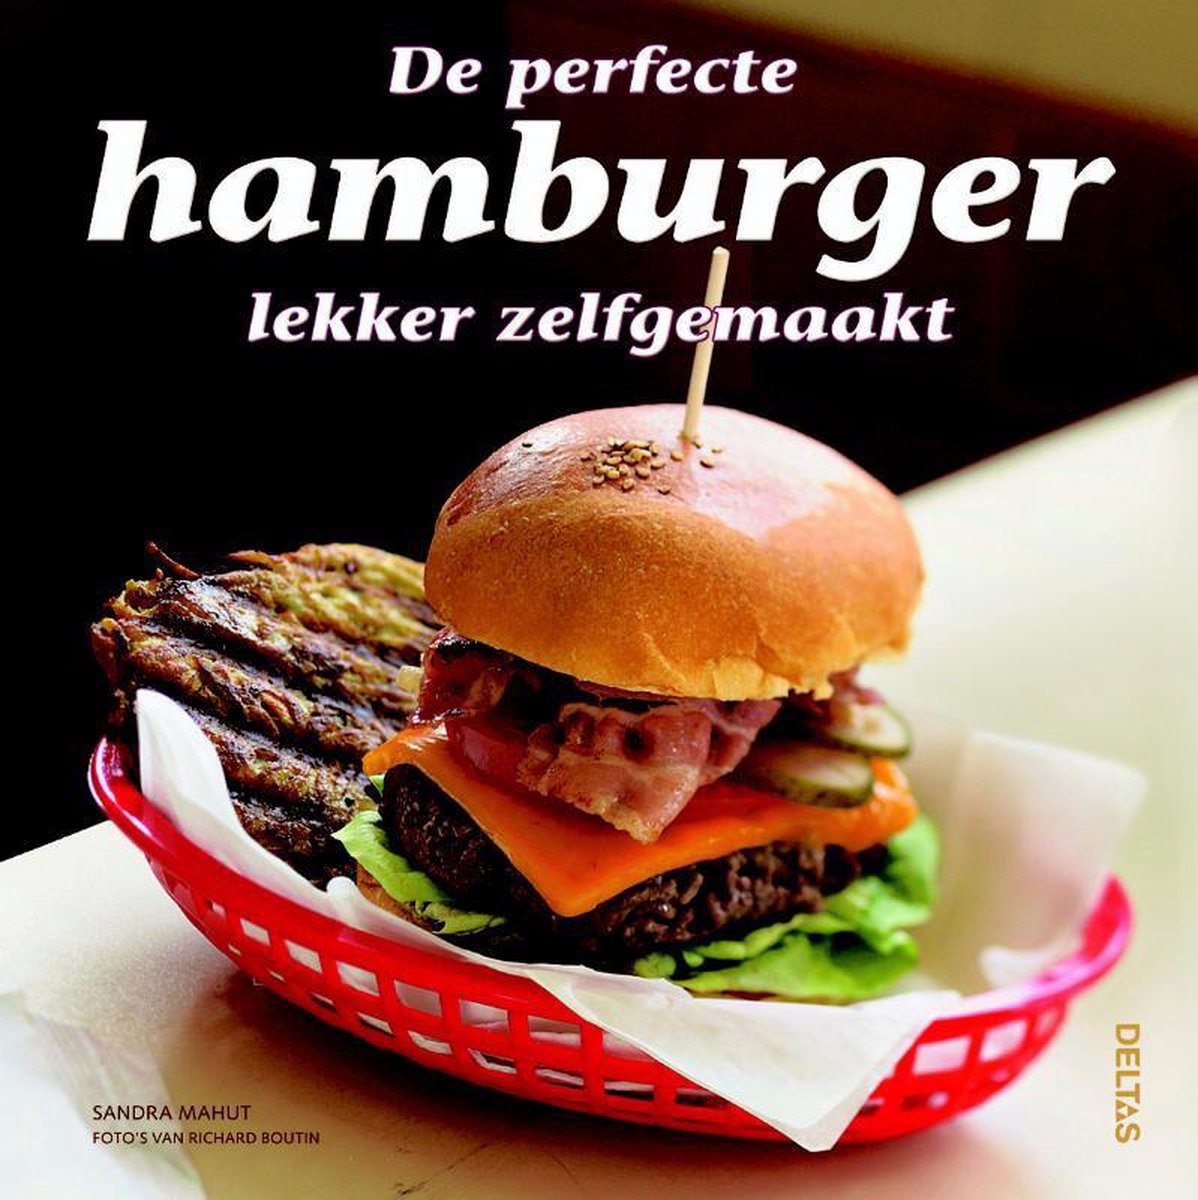 De perfecte hamburger lekker zelfgemaakt, Sandra Mahut | 9789044725353 |  Boeken | bol.com